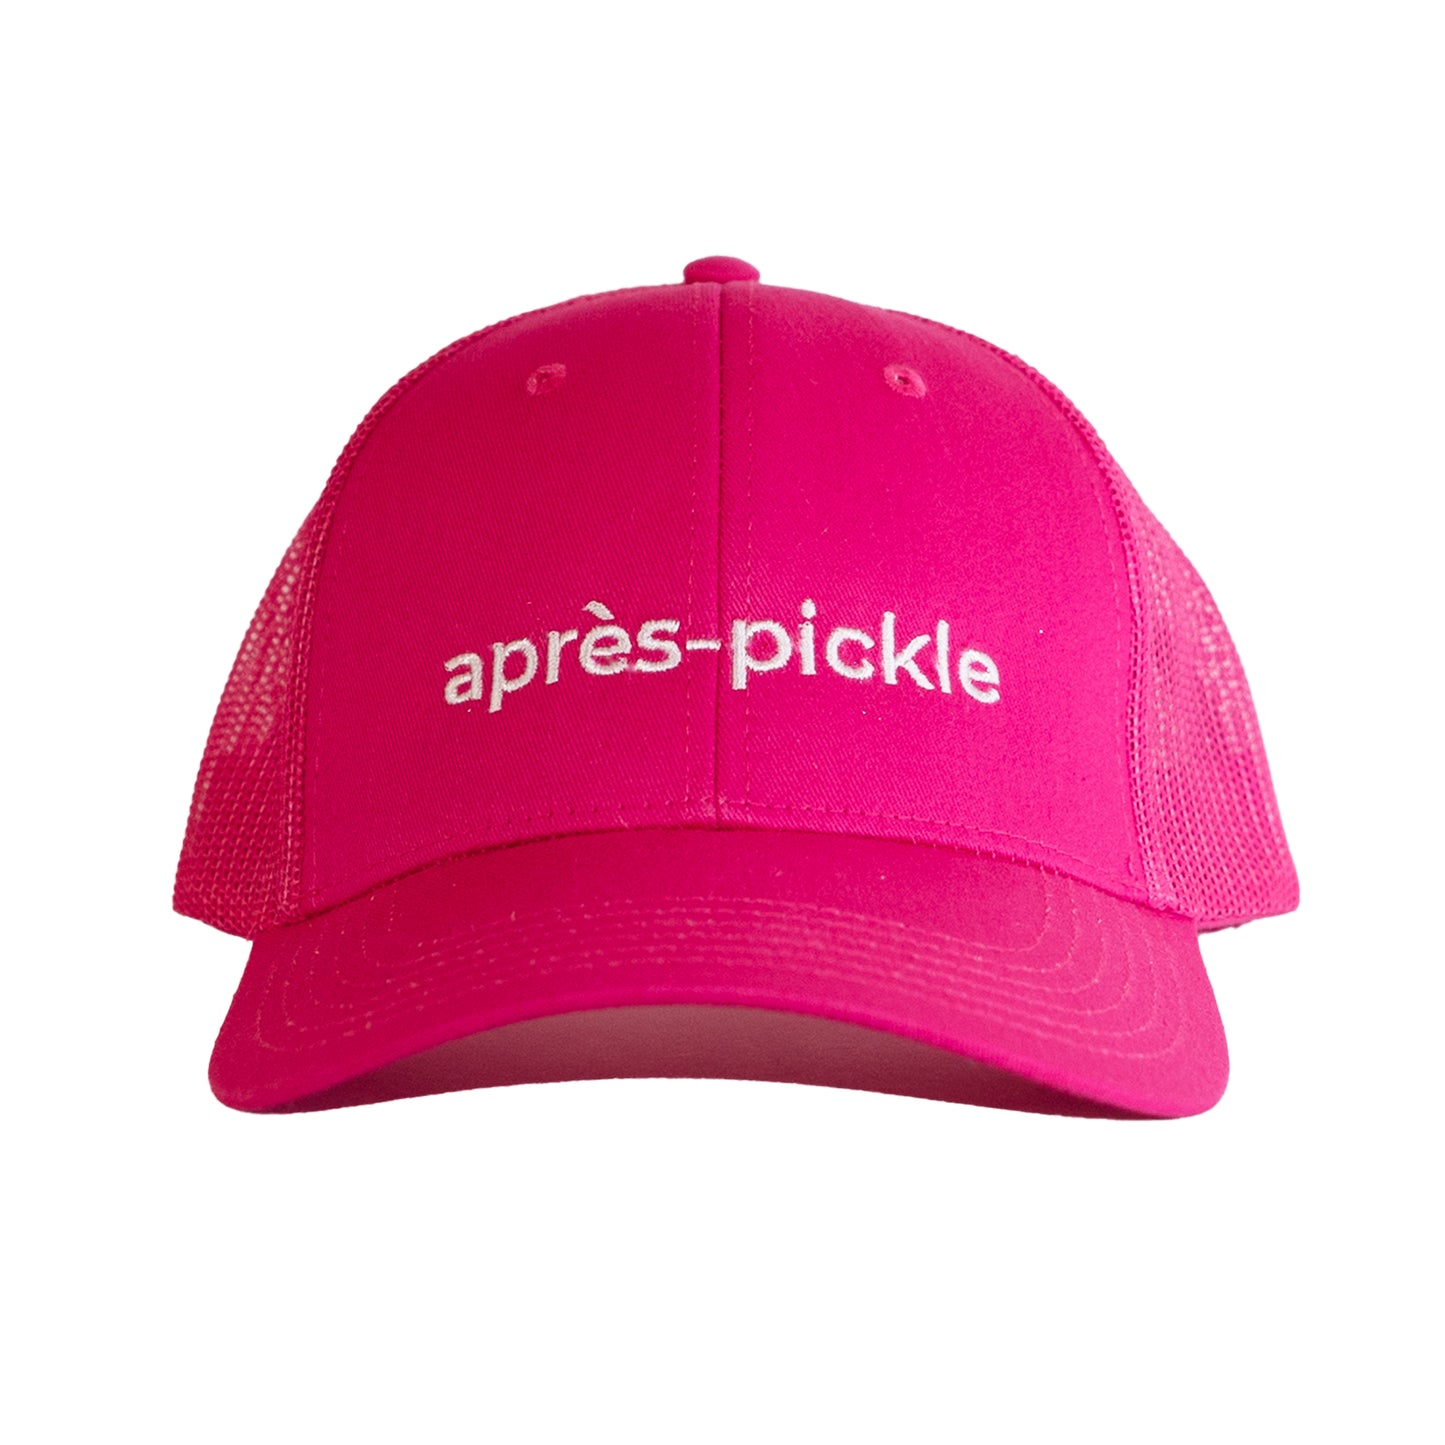 Low Pro après-pickle Trucker Hat